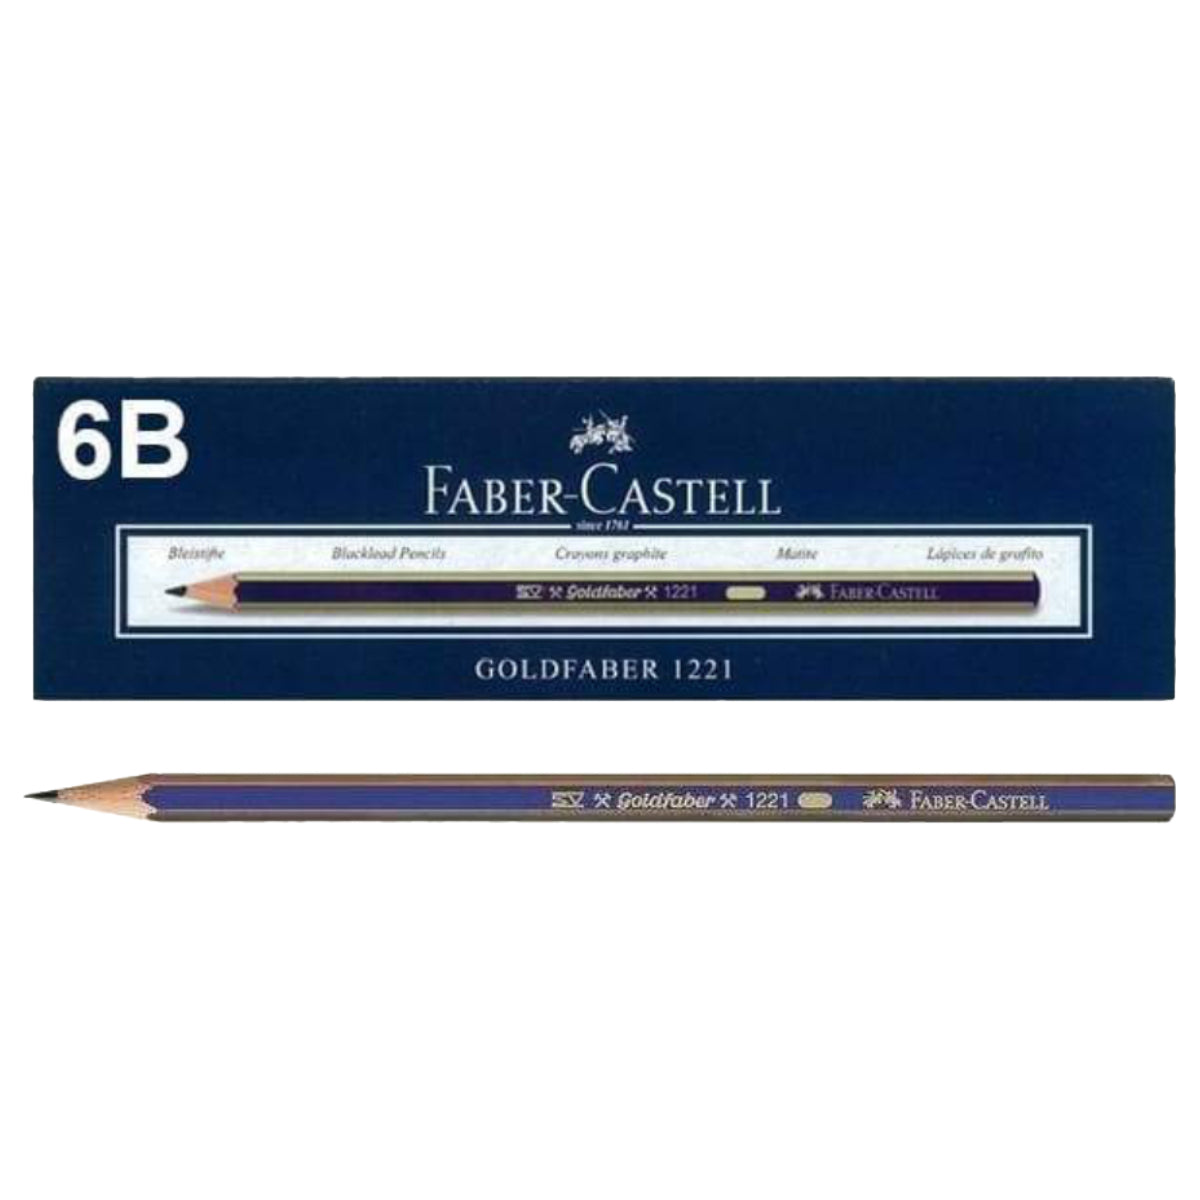 Faber Castell Graphite pencil GOLDFABER 1221, 6B